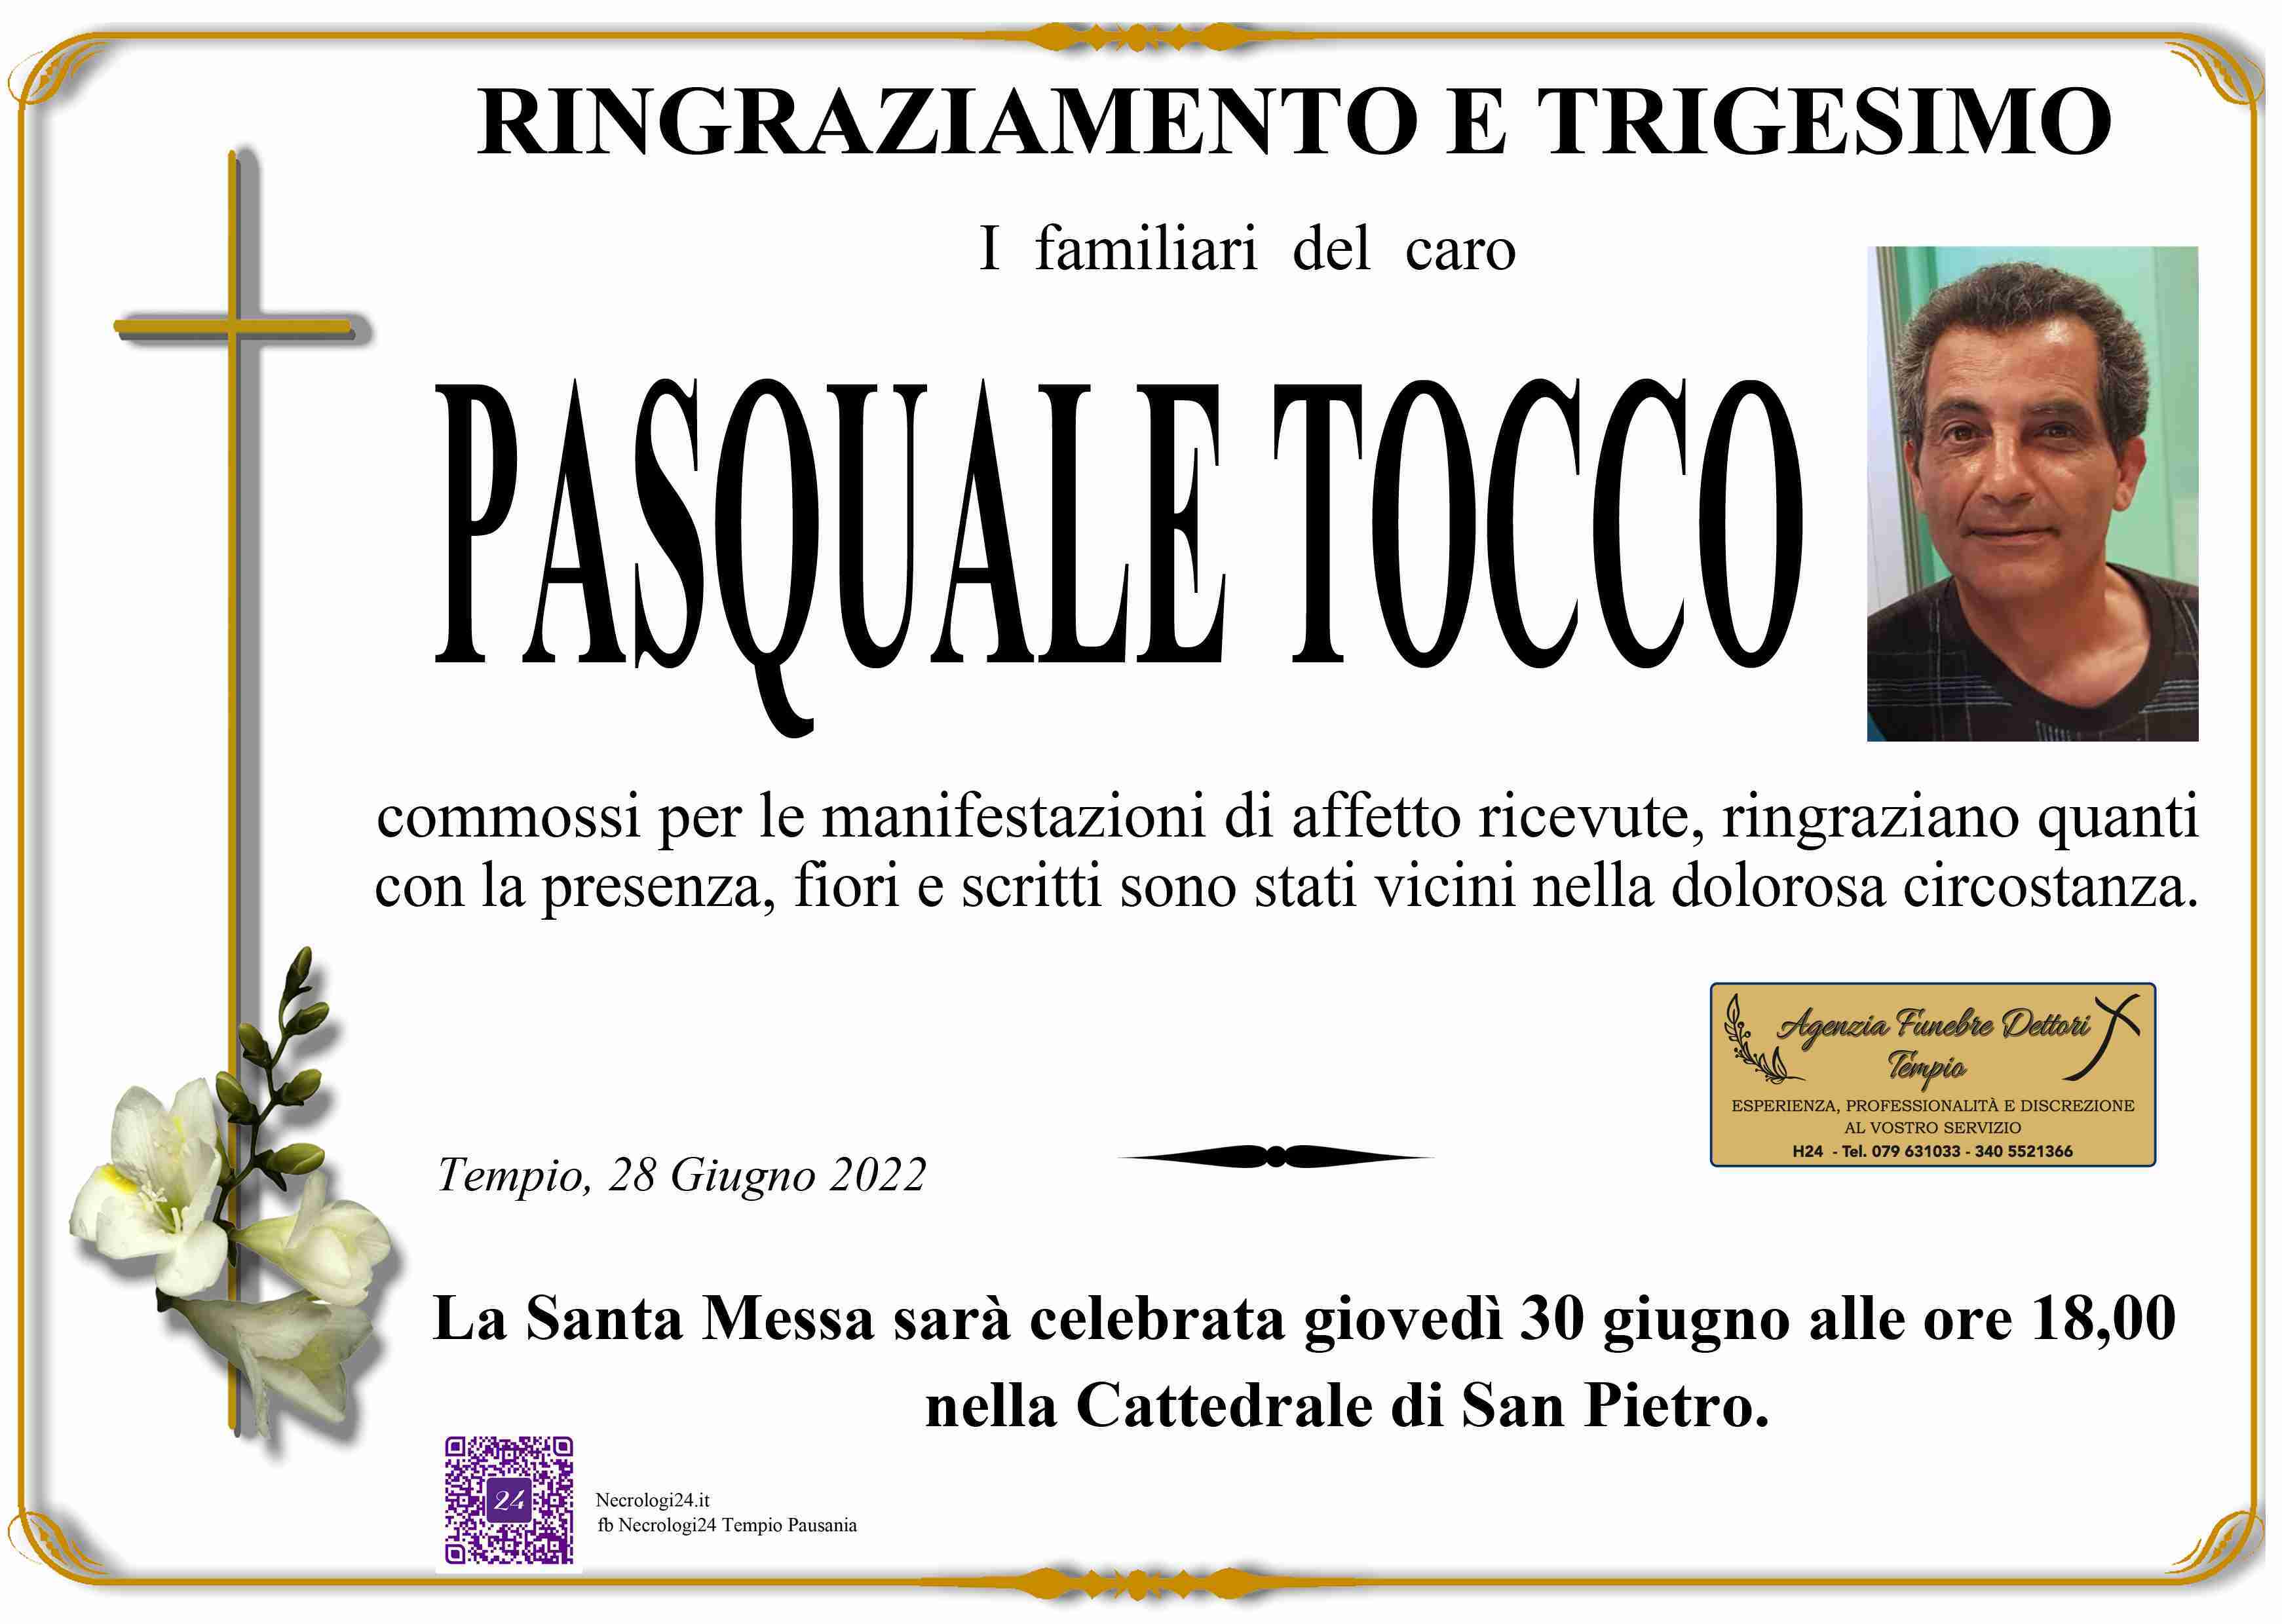 Pasquale Tocco